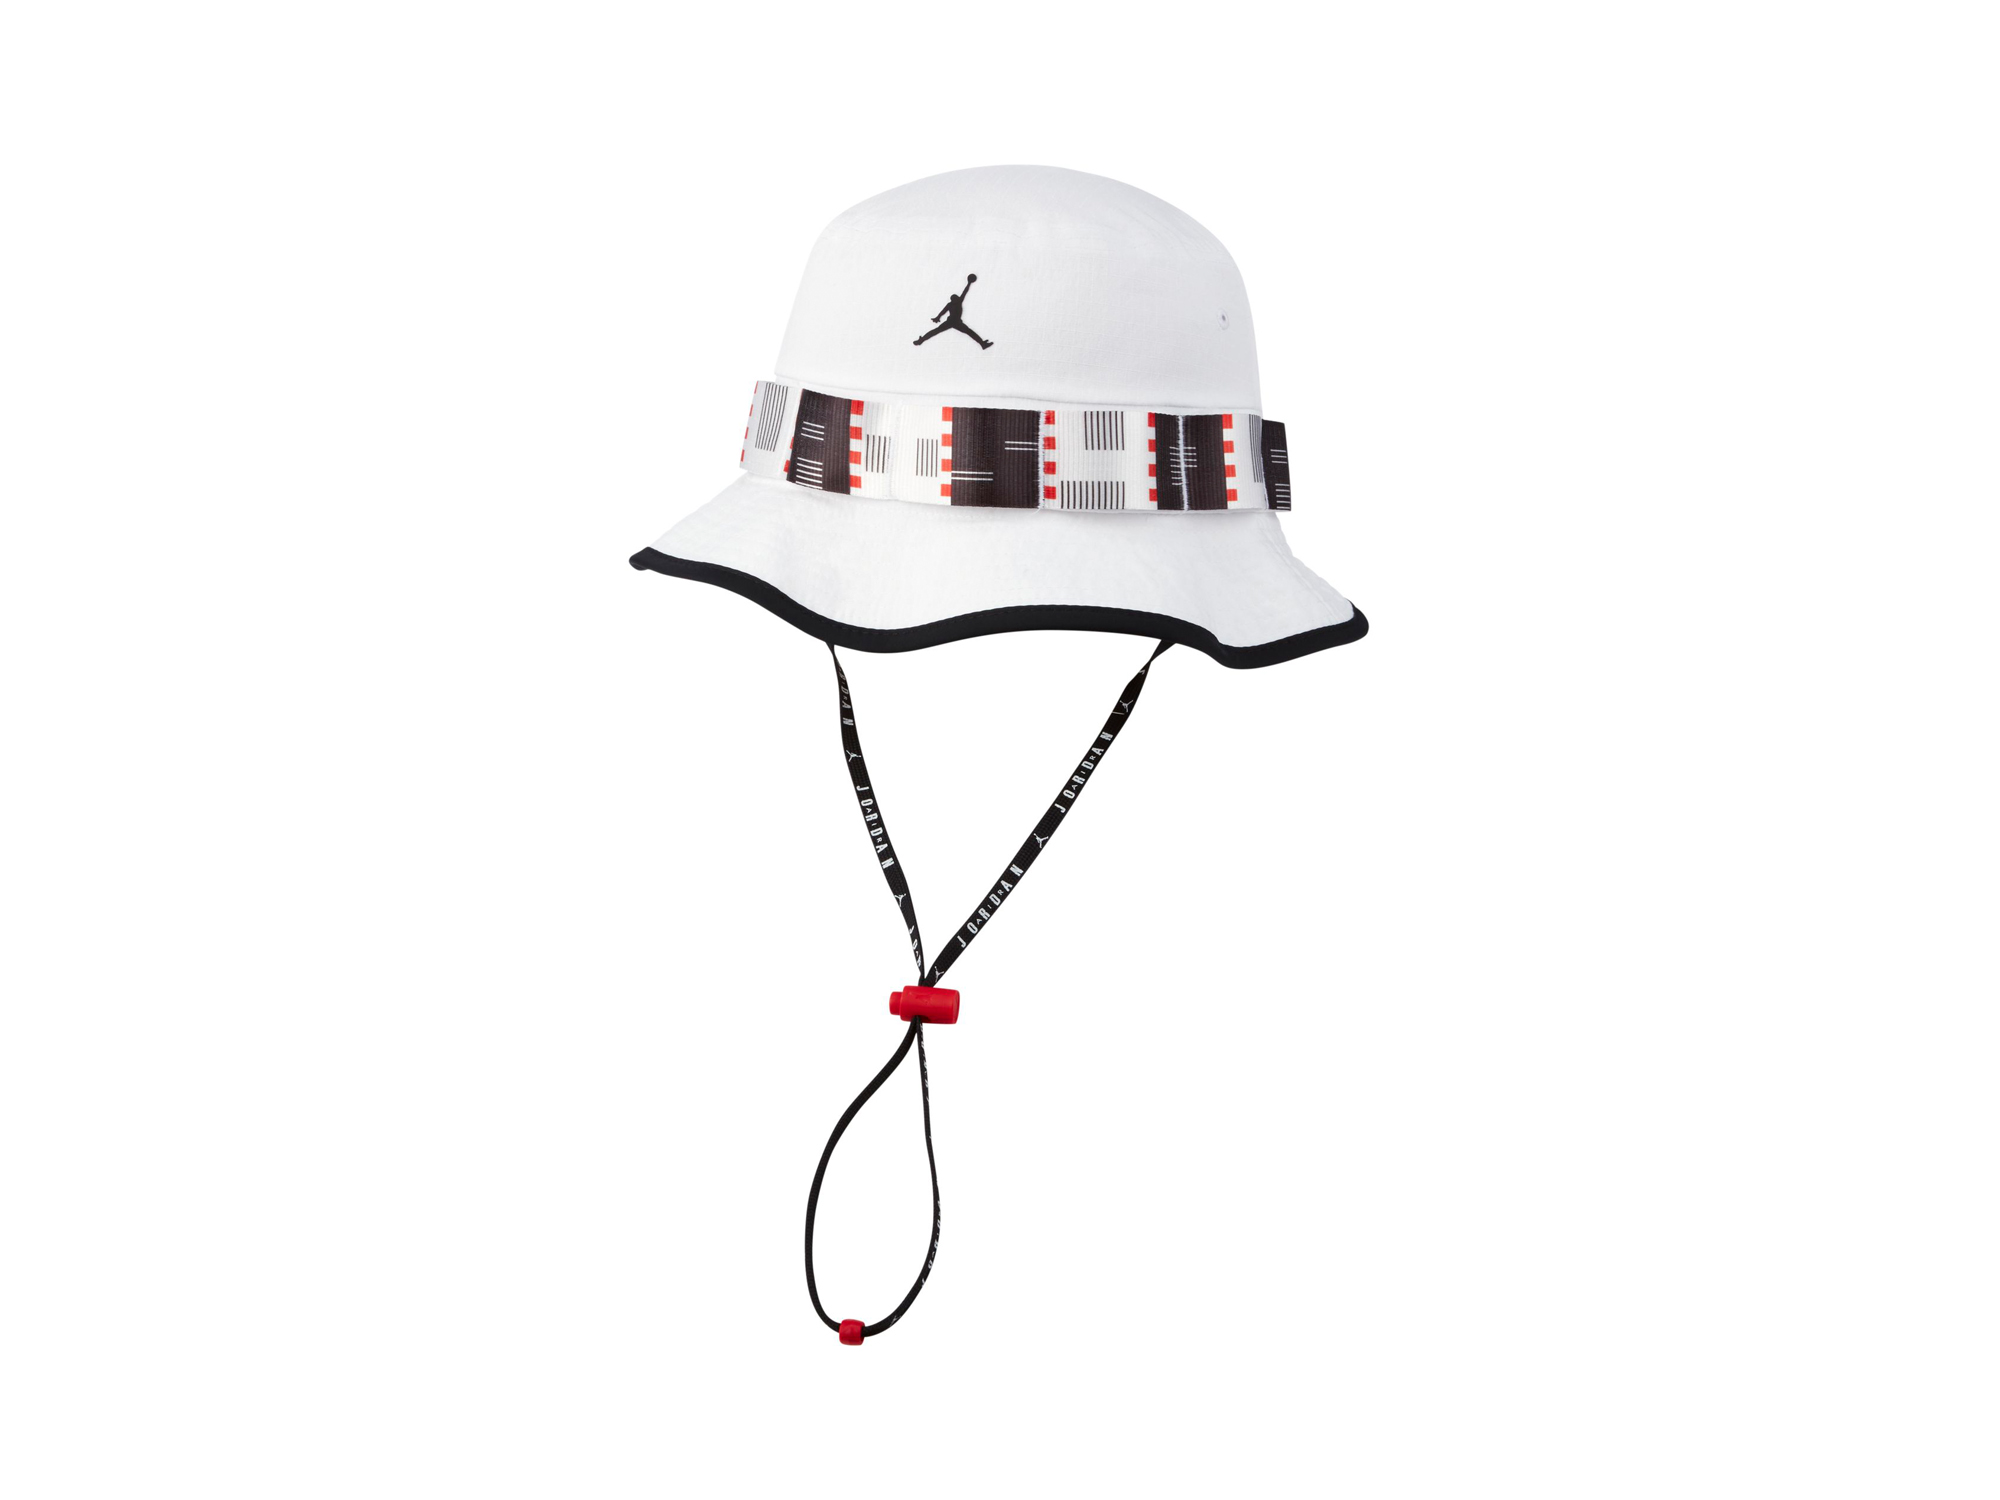 Jordan Quai 54 Bucket Hat 